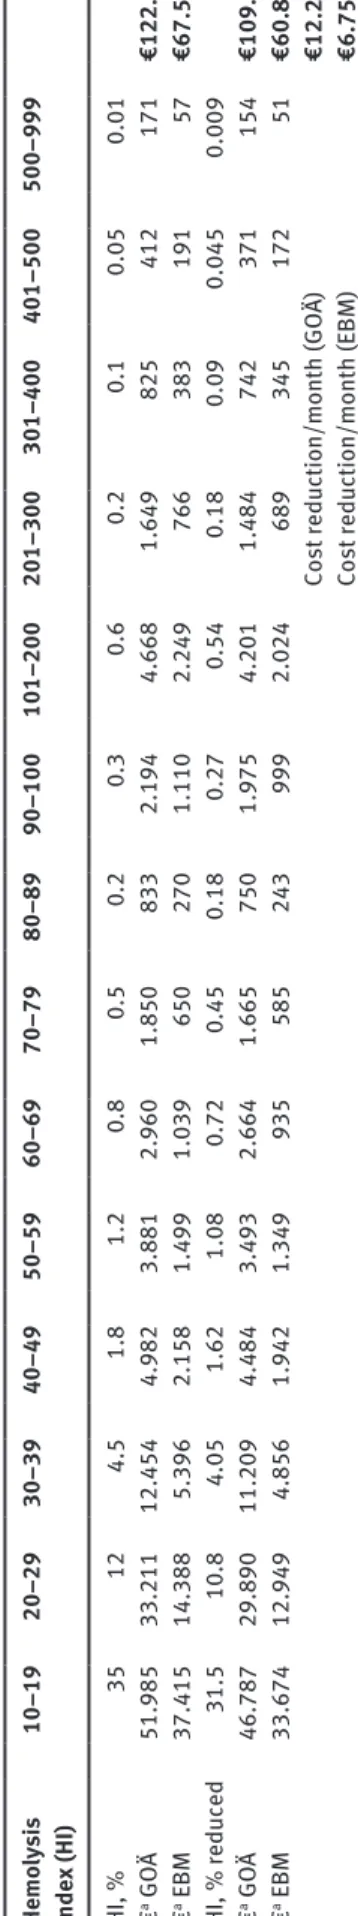 Table 2: Hypothetical model for estimation of the financial impact of hemolysis. Hemolysis  index (HI) 10–19 20–29 30–39 40–49 50–59 60–69 70–79 80–89 90–100 101–200 201–300 301–400 401–500 500–999  HI, % 35 12 4.5 1.8 1.2 0.8 0.5 0.2 0.3 0.6 0.2 0.1 0.05 